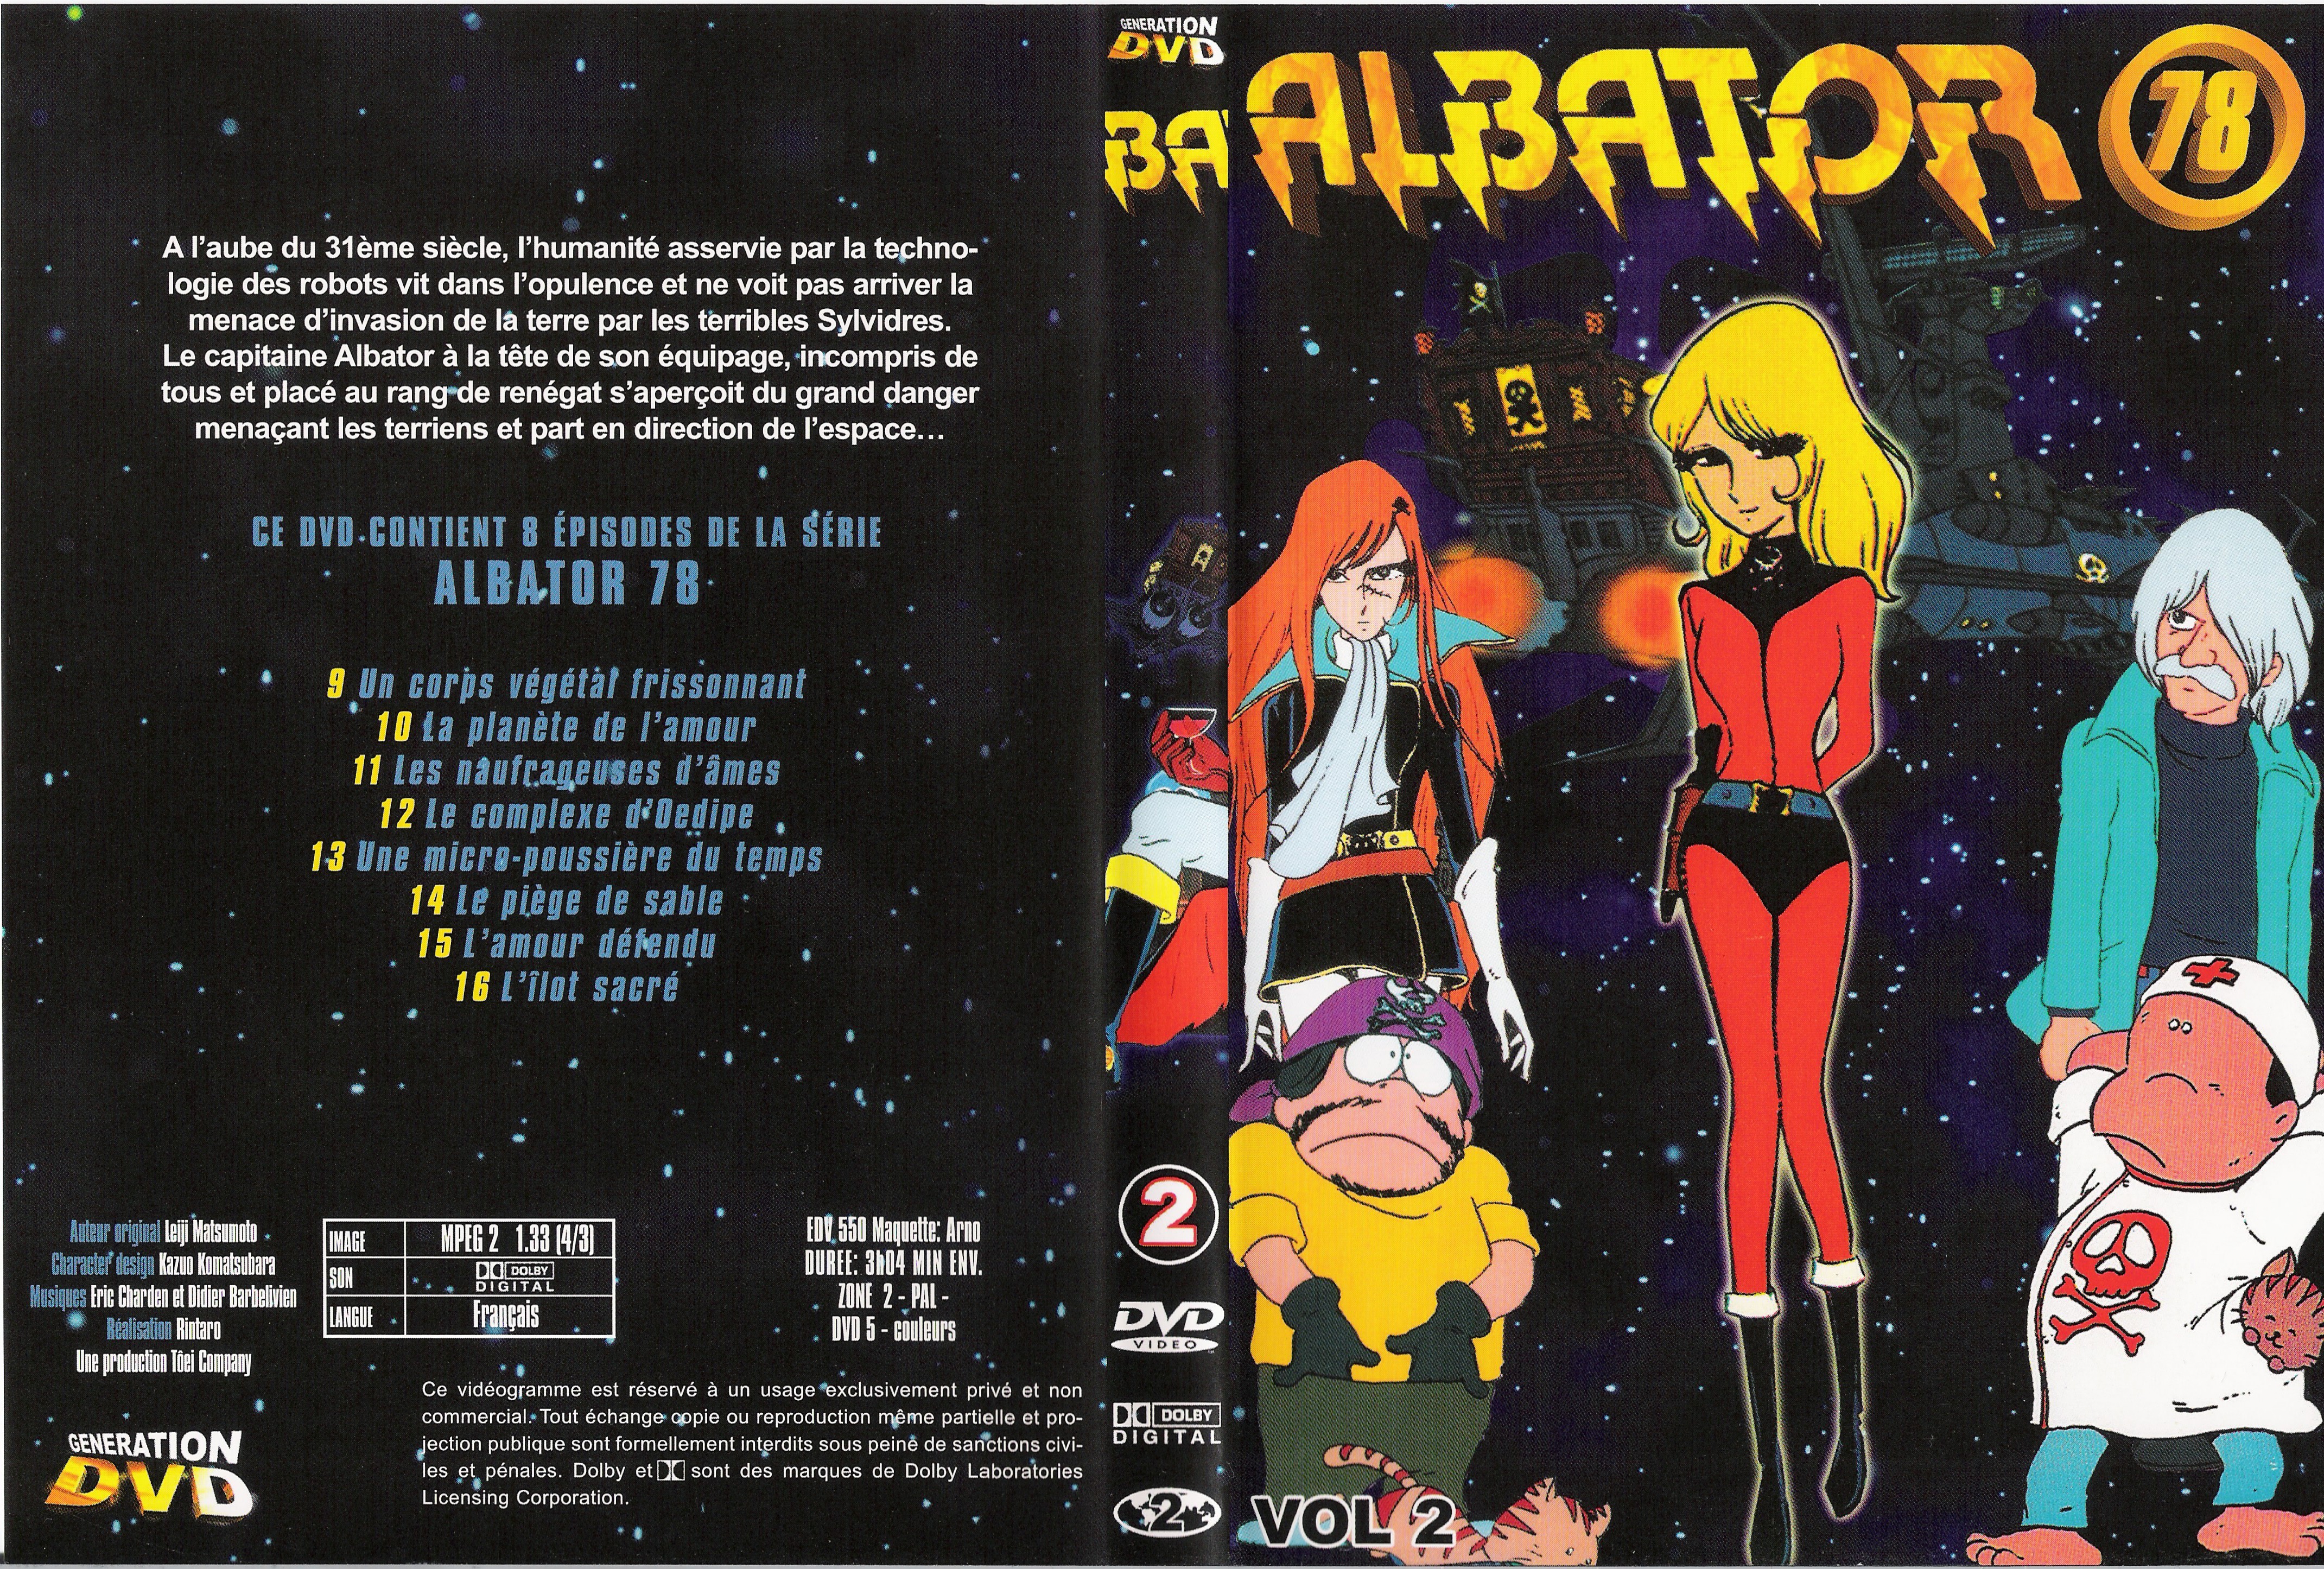 Jaquette DVD Albator 78 vol 2 (GENERATION DVD)